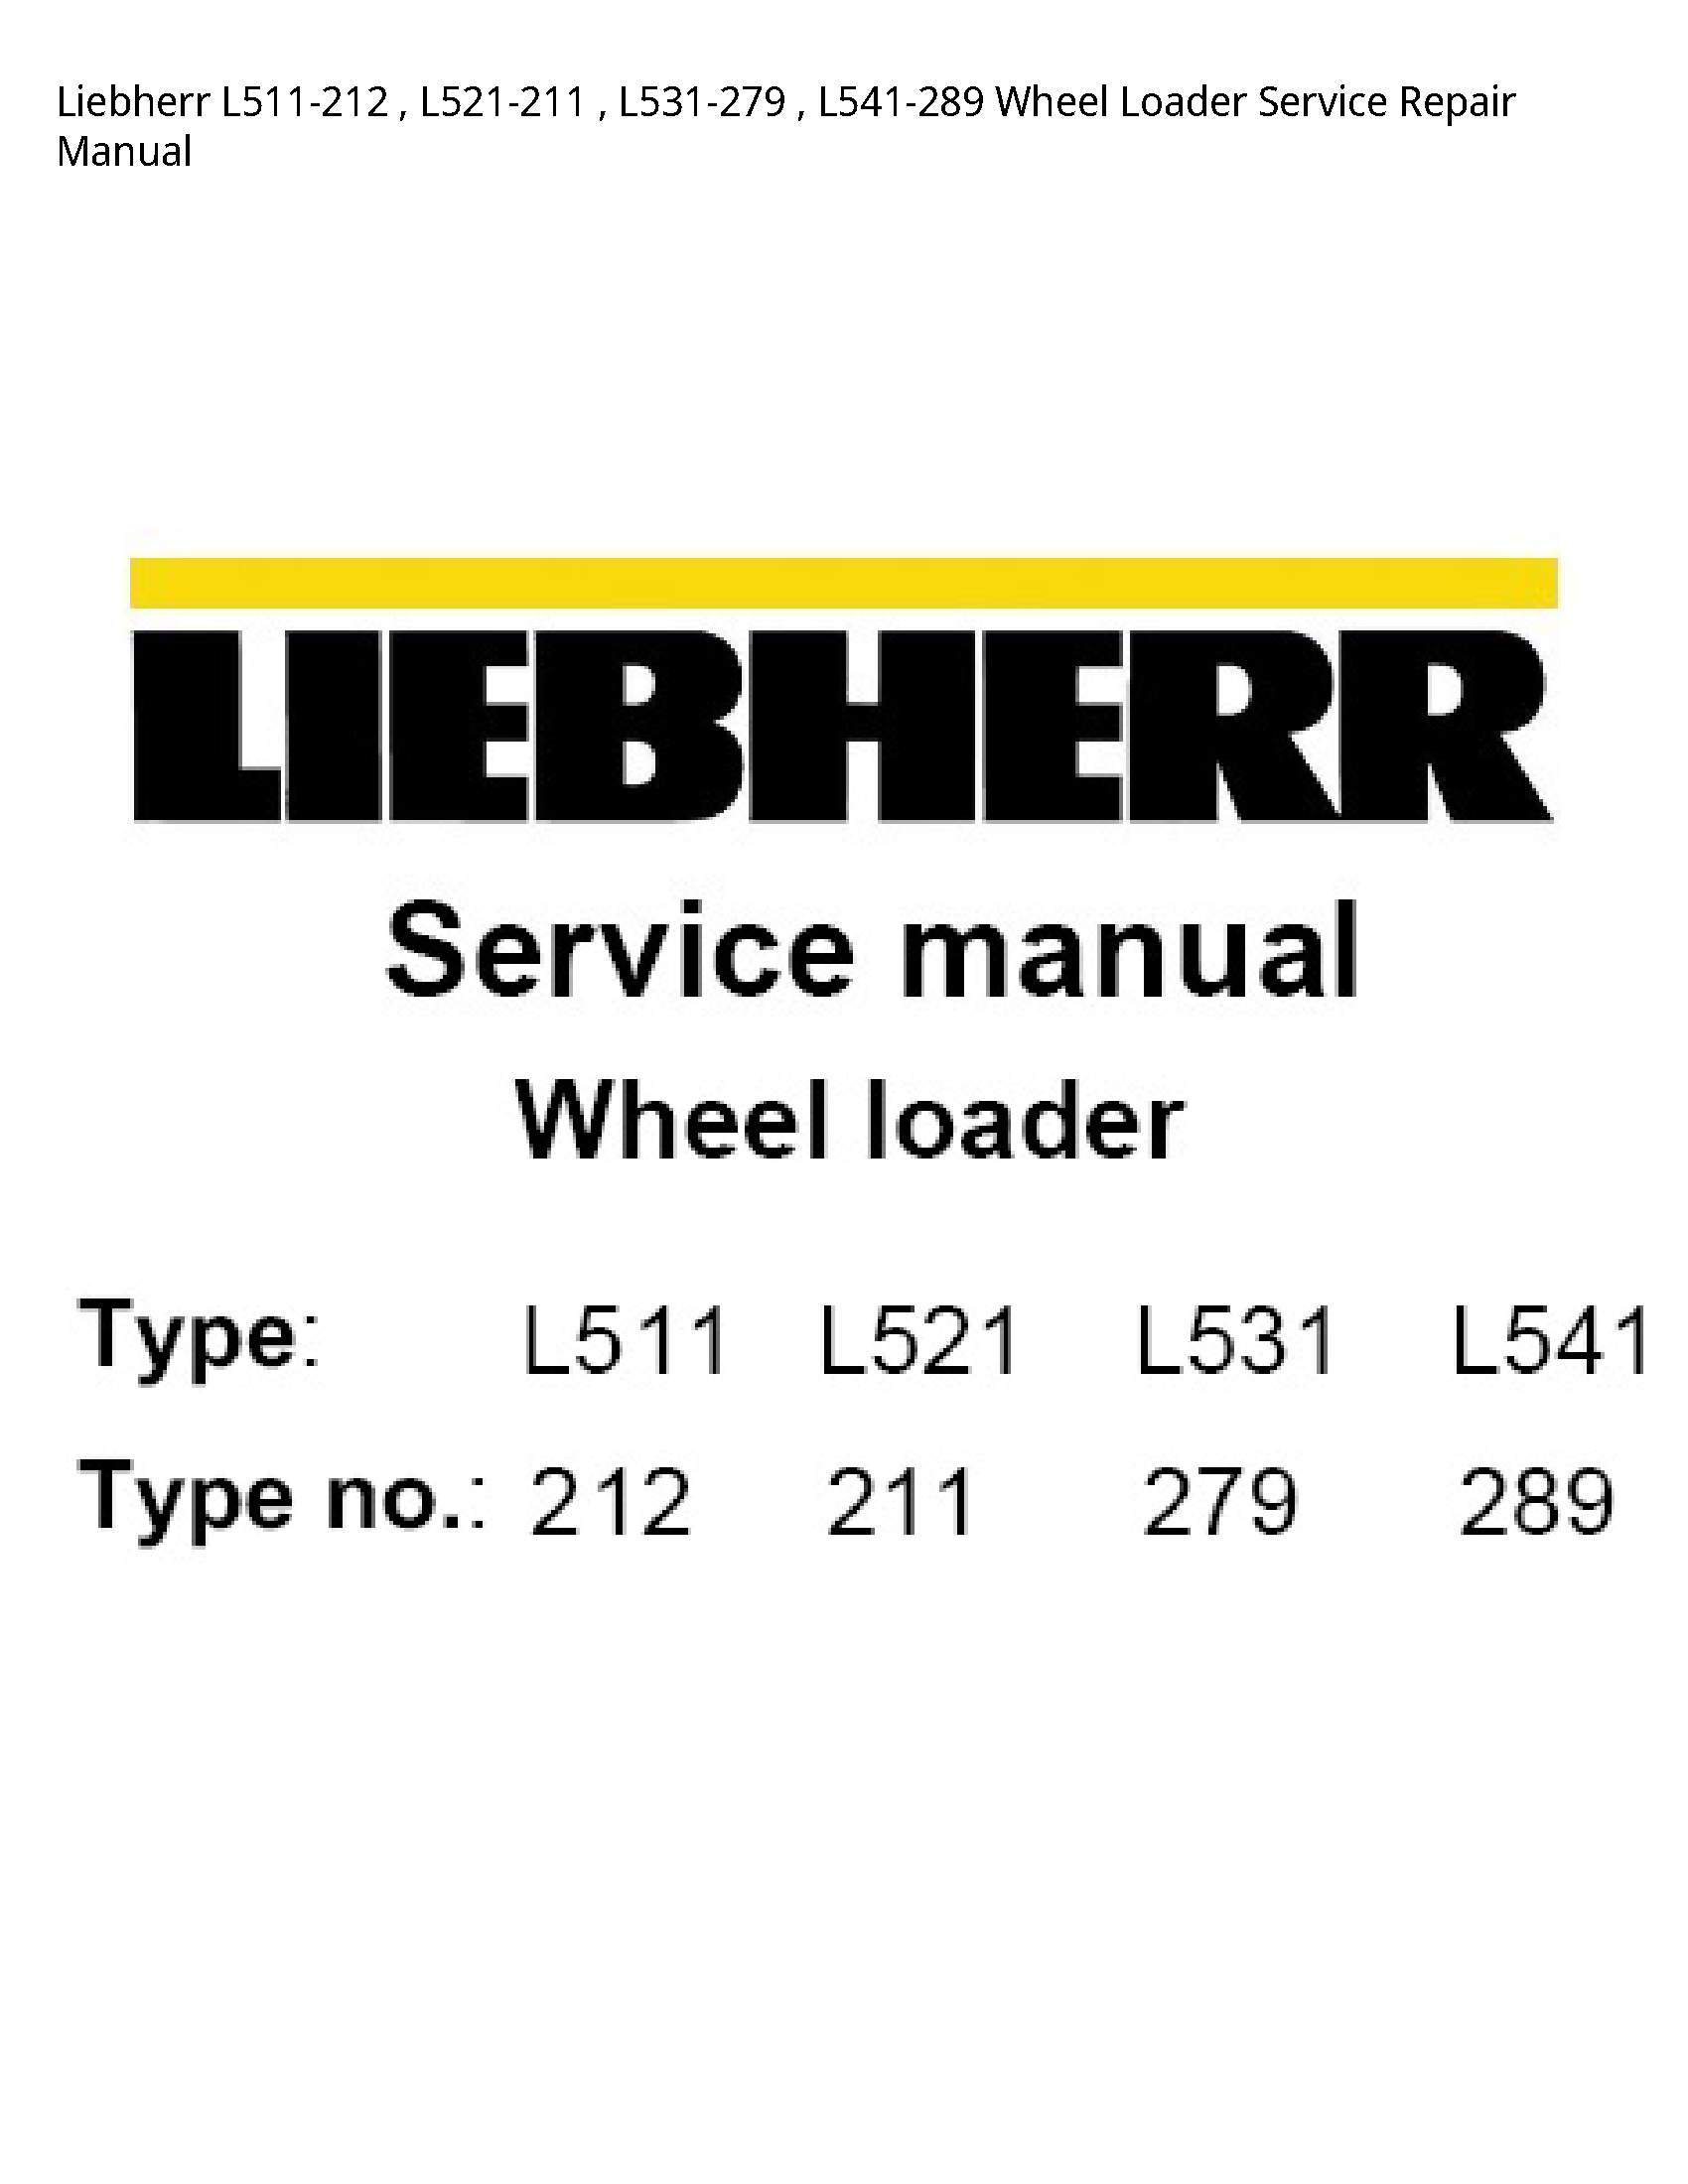 Liebherr L511-212 Wheel Loader manual